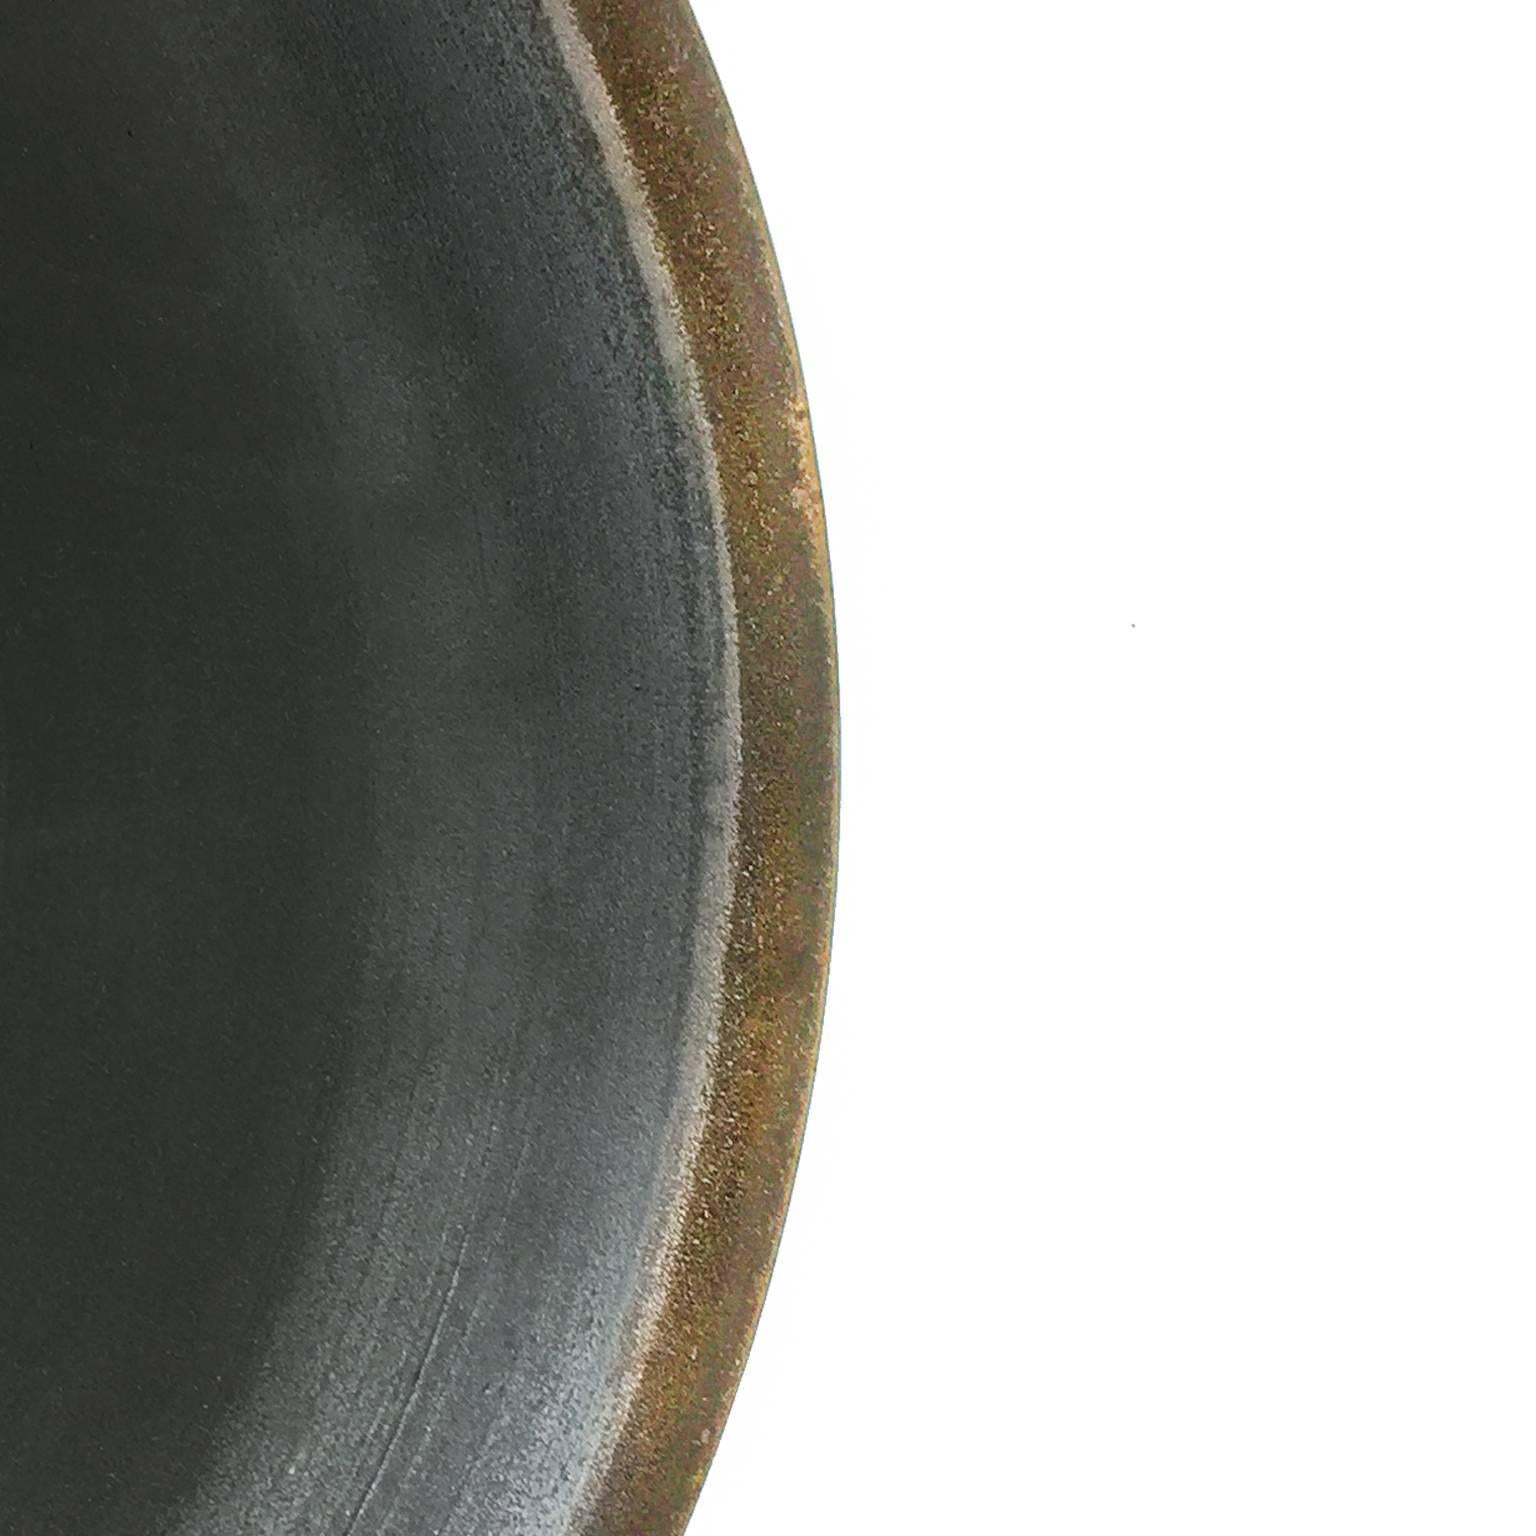 American Low Black Matte Ceramic Bowl with Gold Glaze Interior and Rim by Sandi Fellman